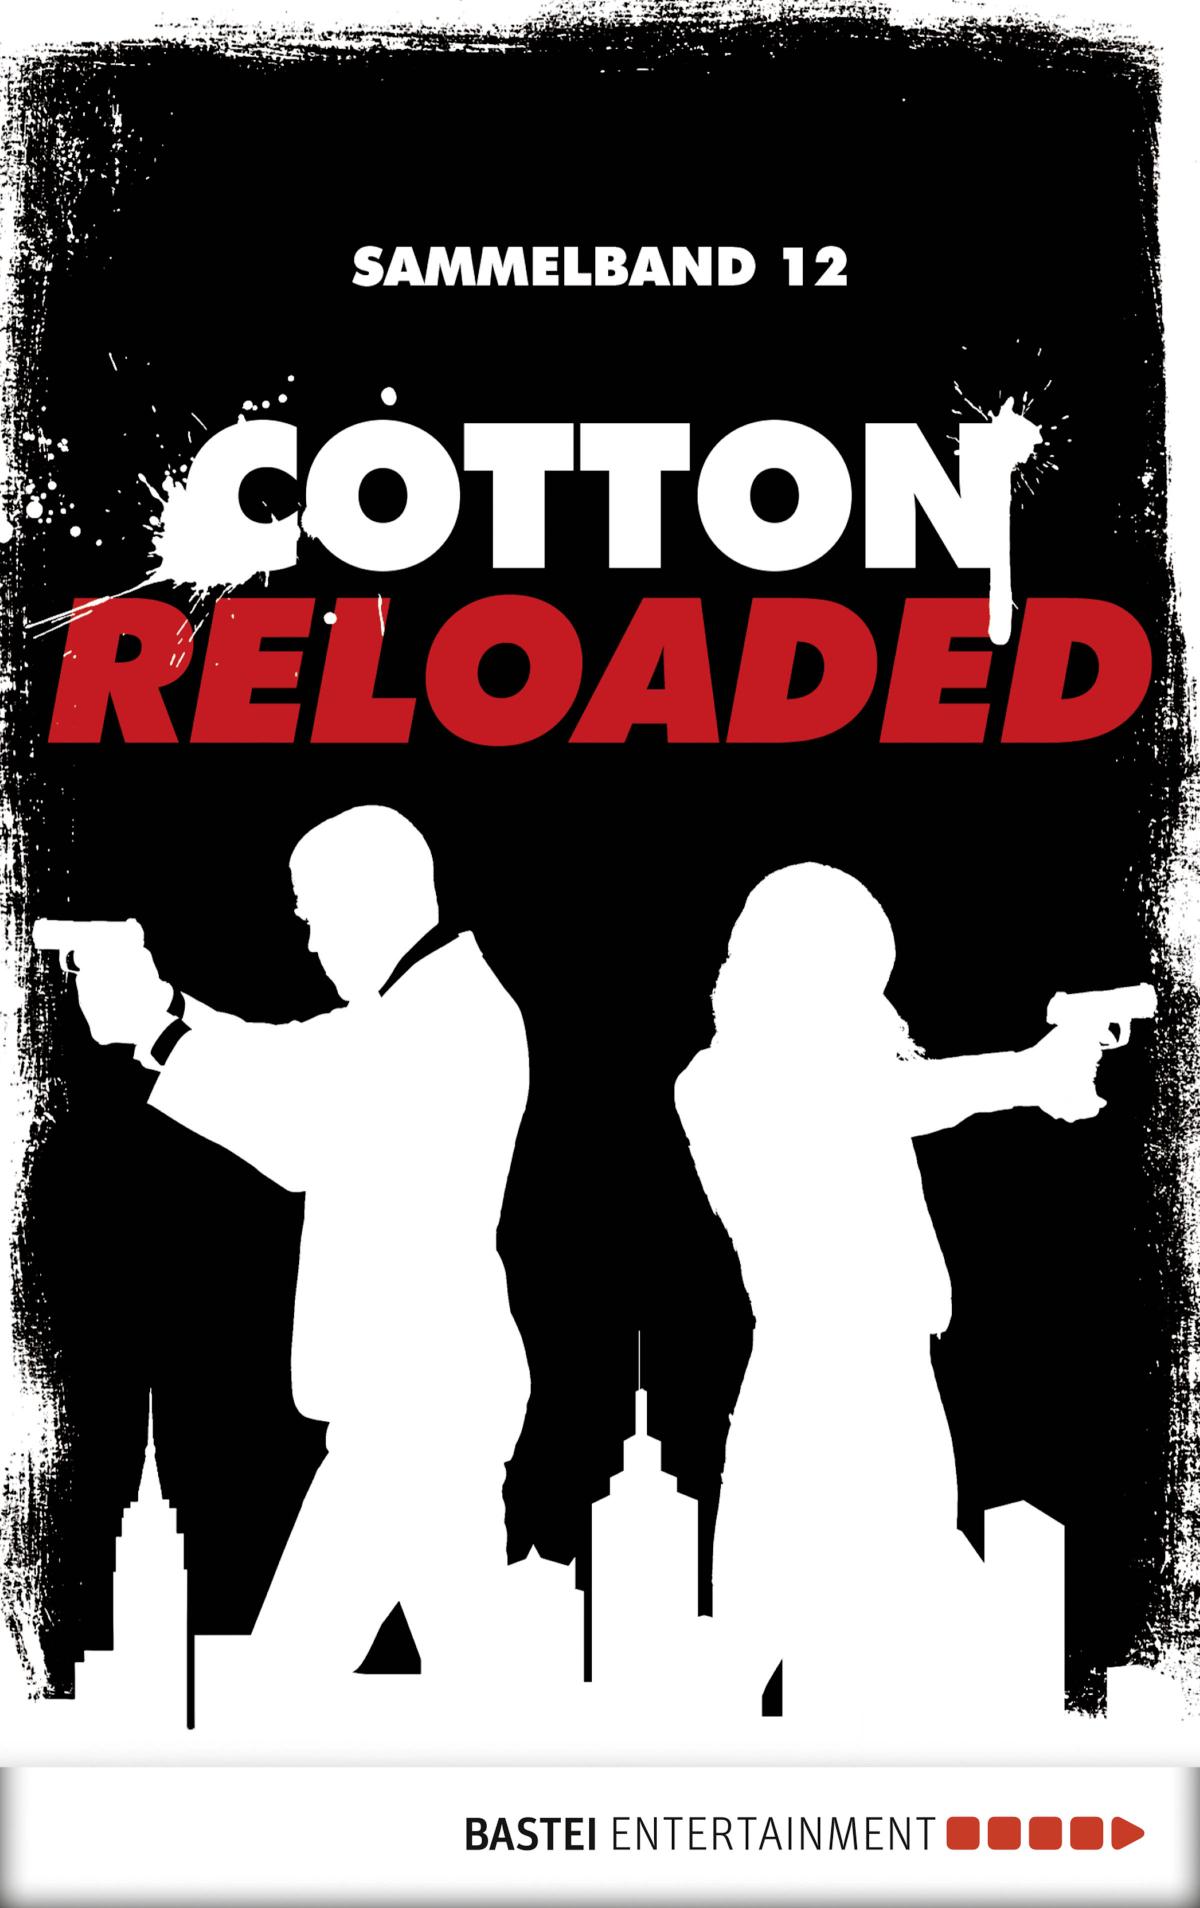 Cotton Reloaded - Sammelband 12 3 Folgen in einem Band